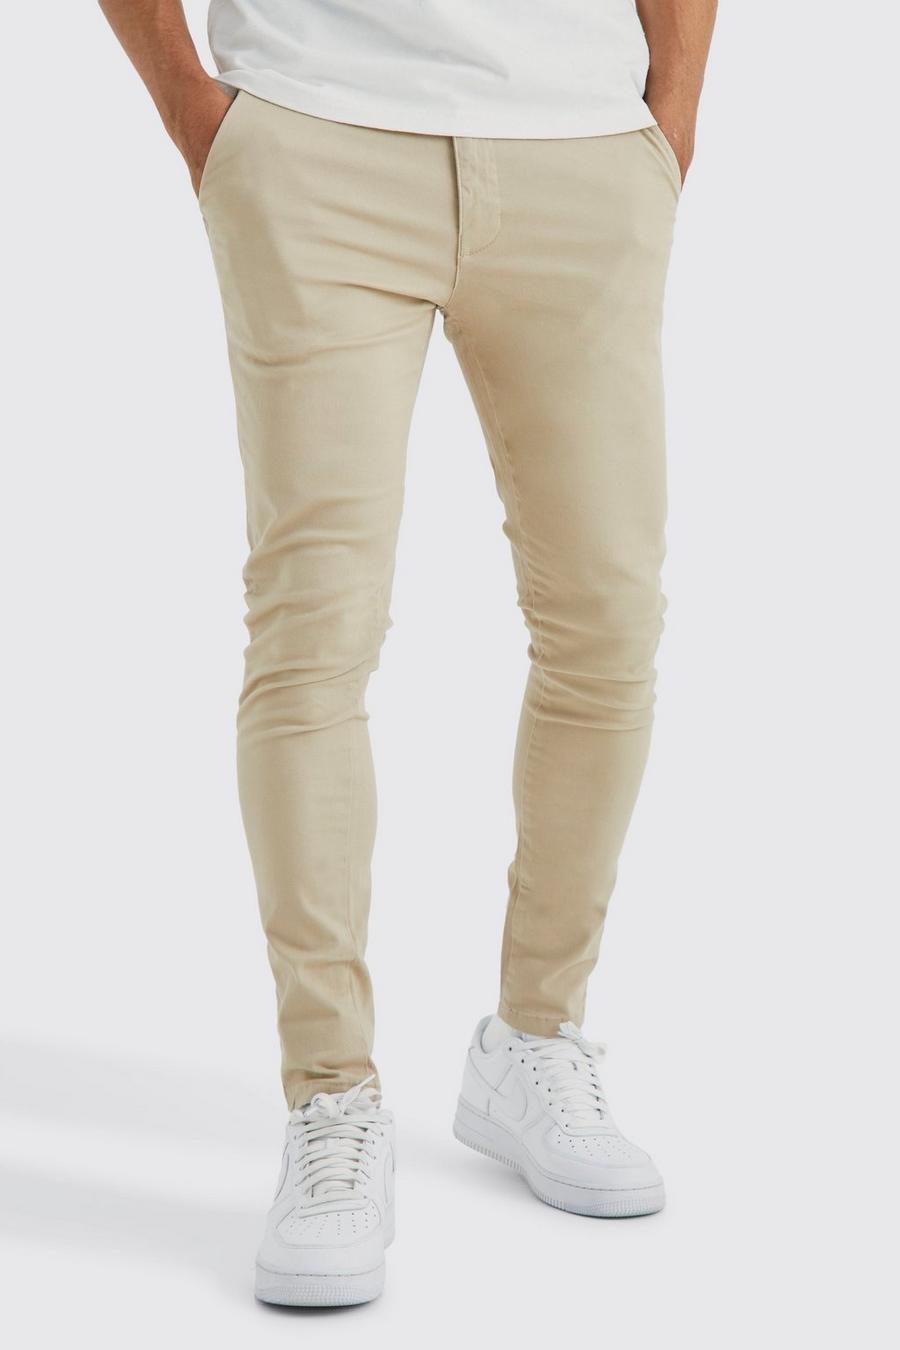 Pantaloni Chino Super Skinny Fit, Stone beige